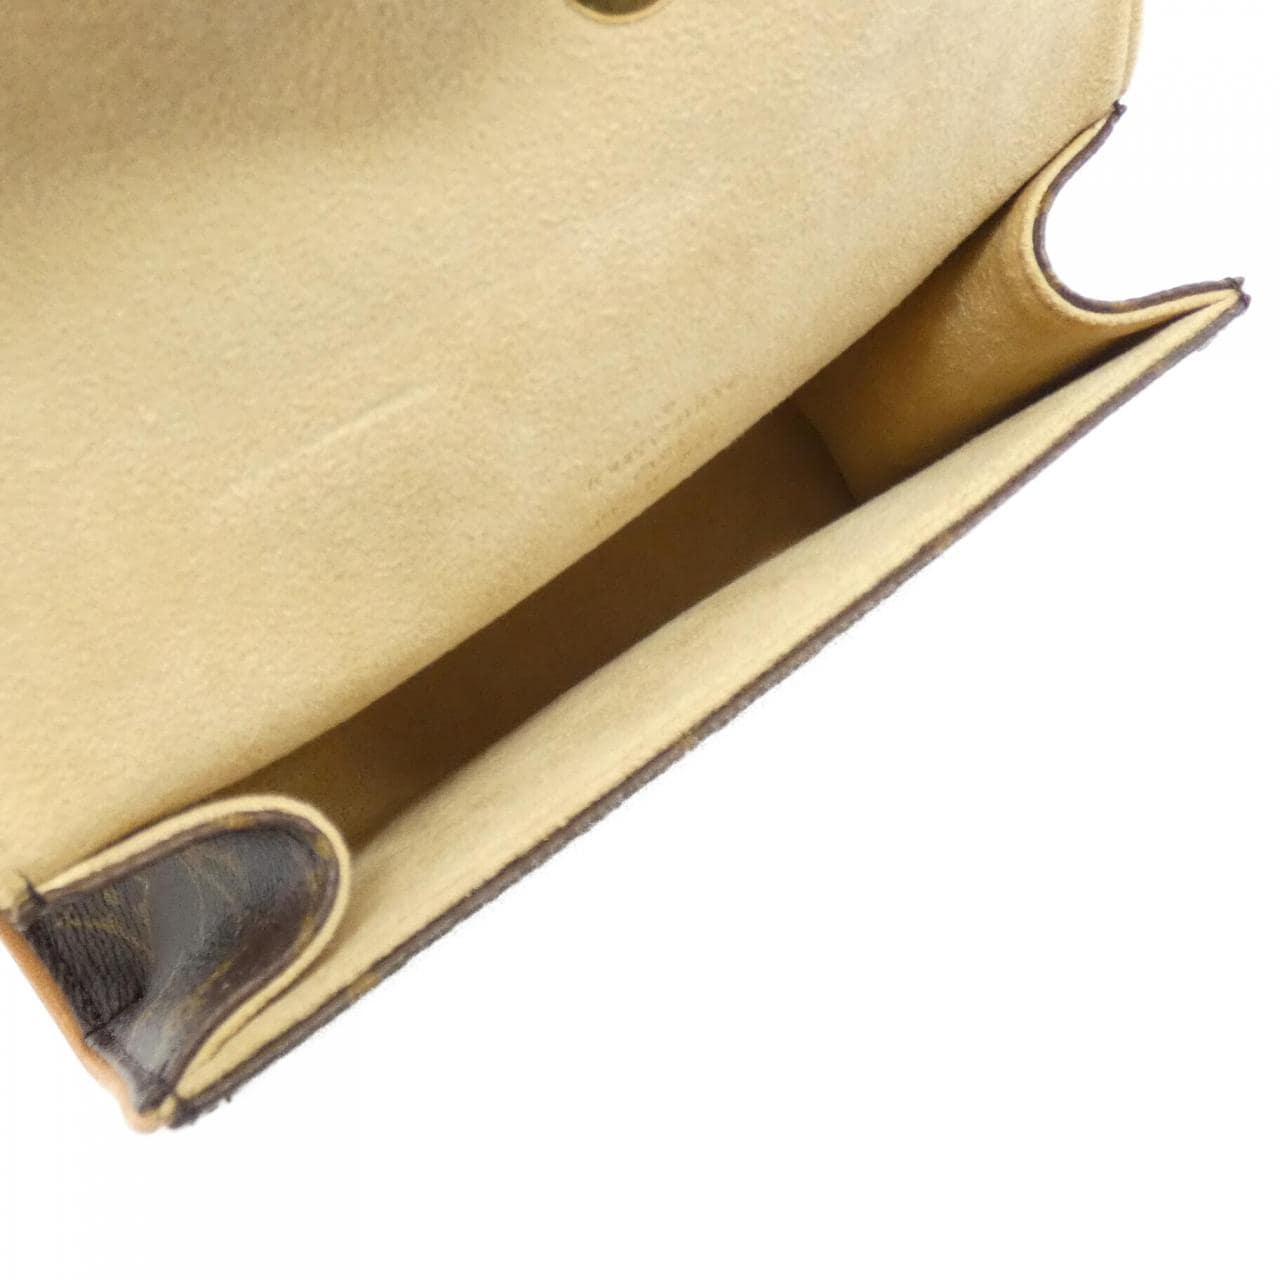 LOUIS VUITTON Monogram Pochette Florentine XS M51855+M67303 Waist Bag